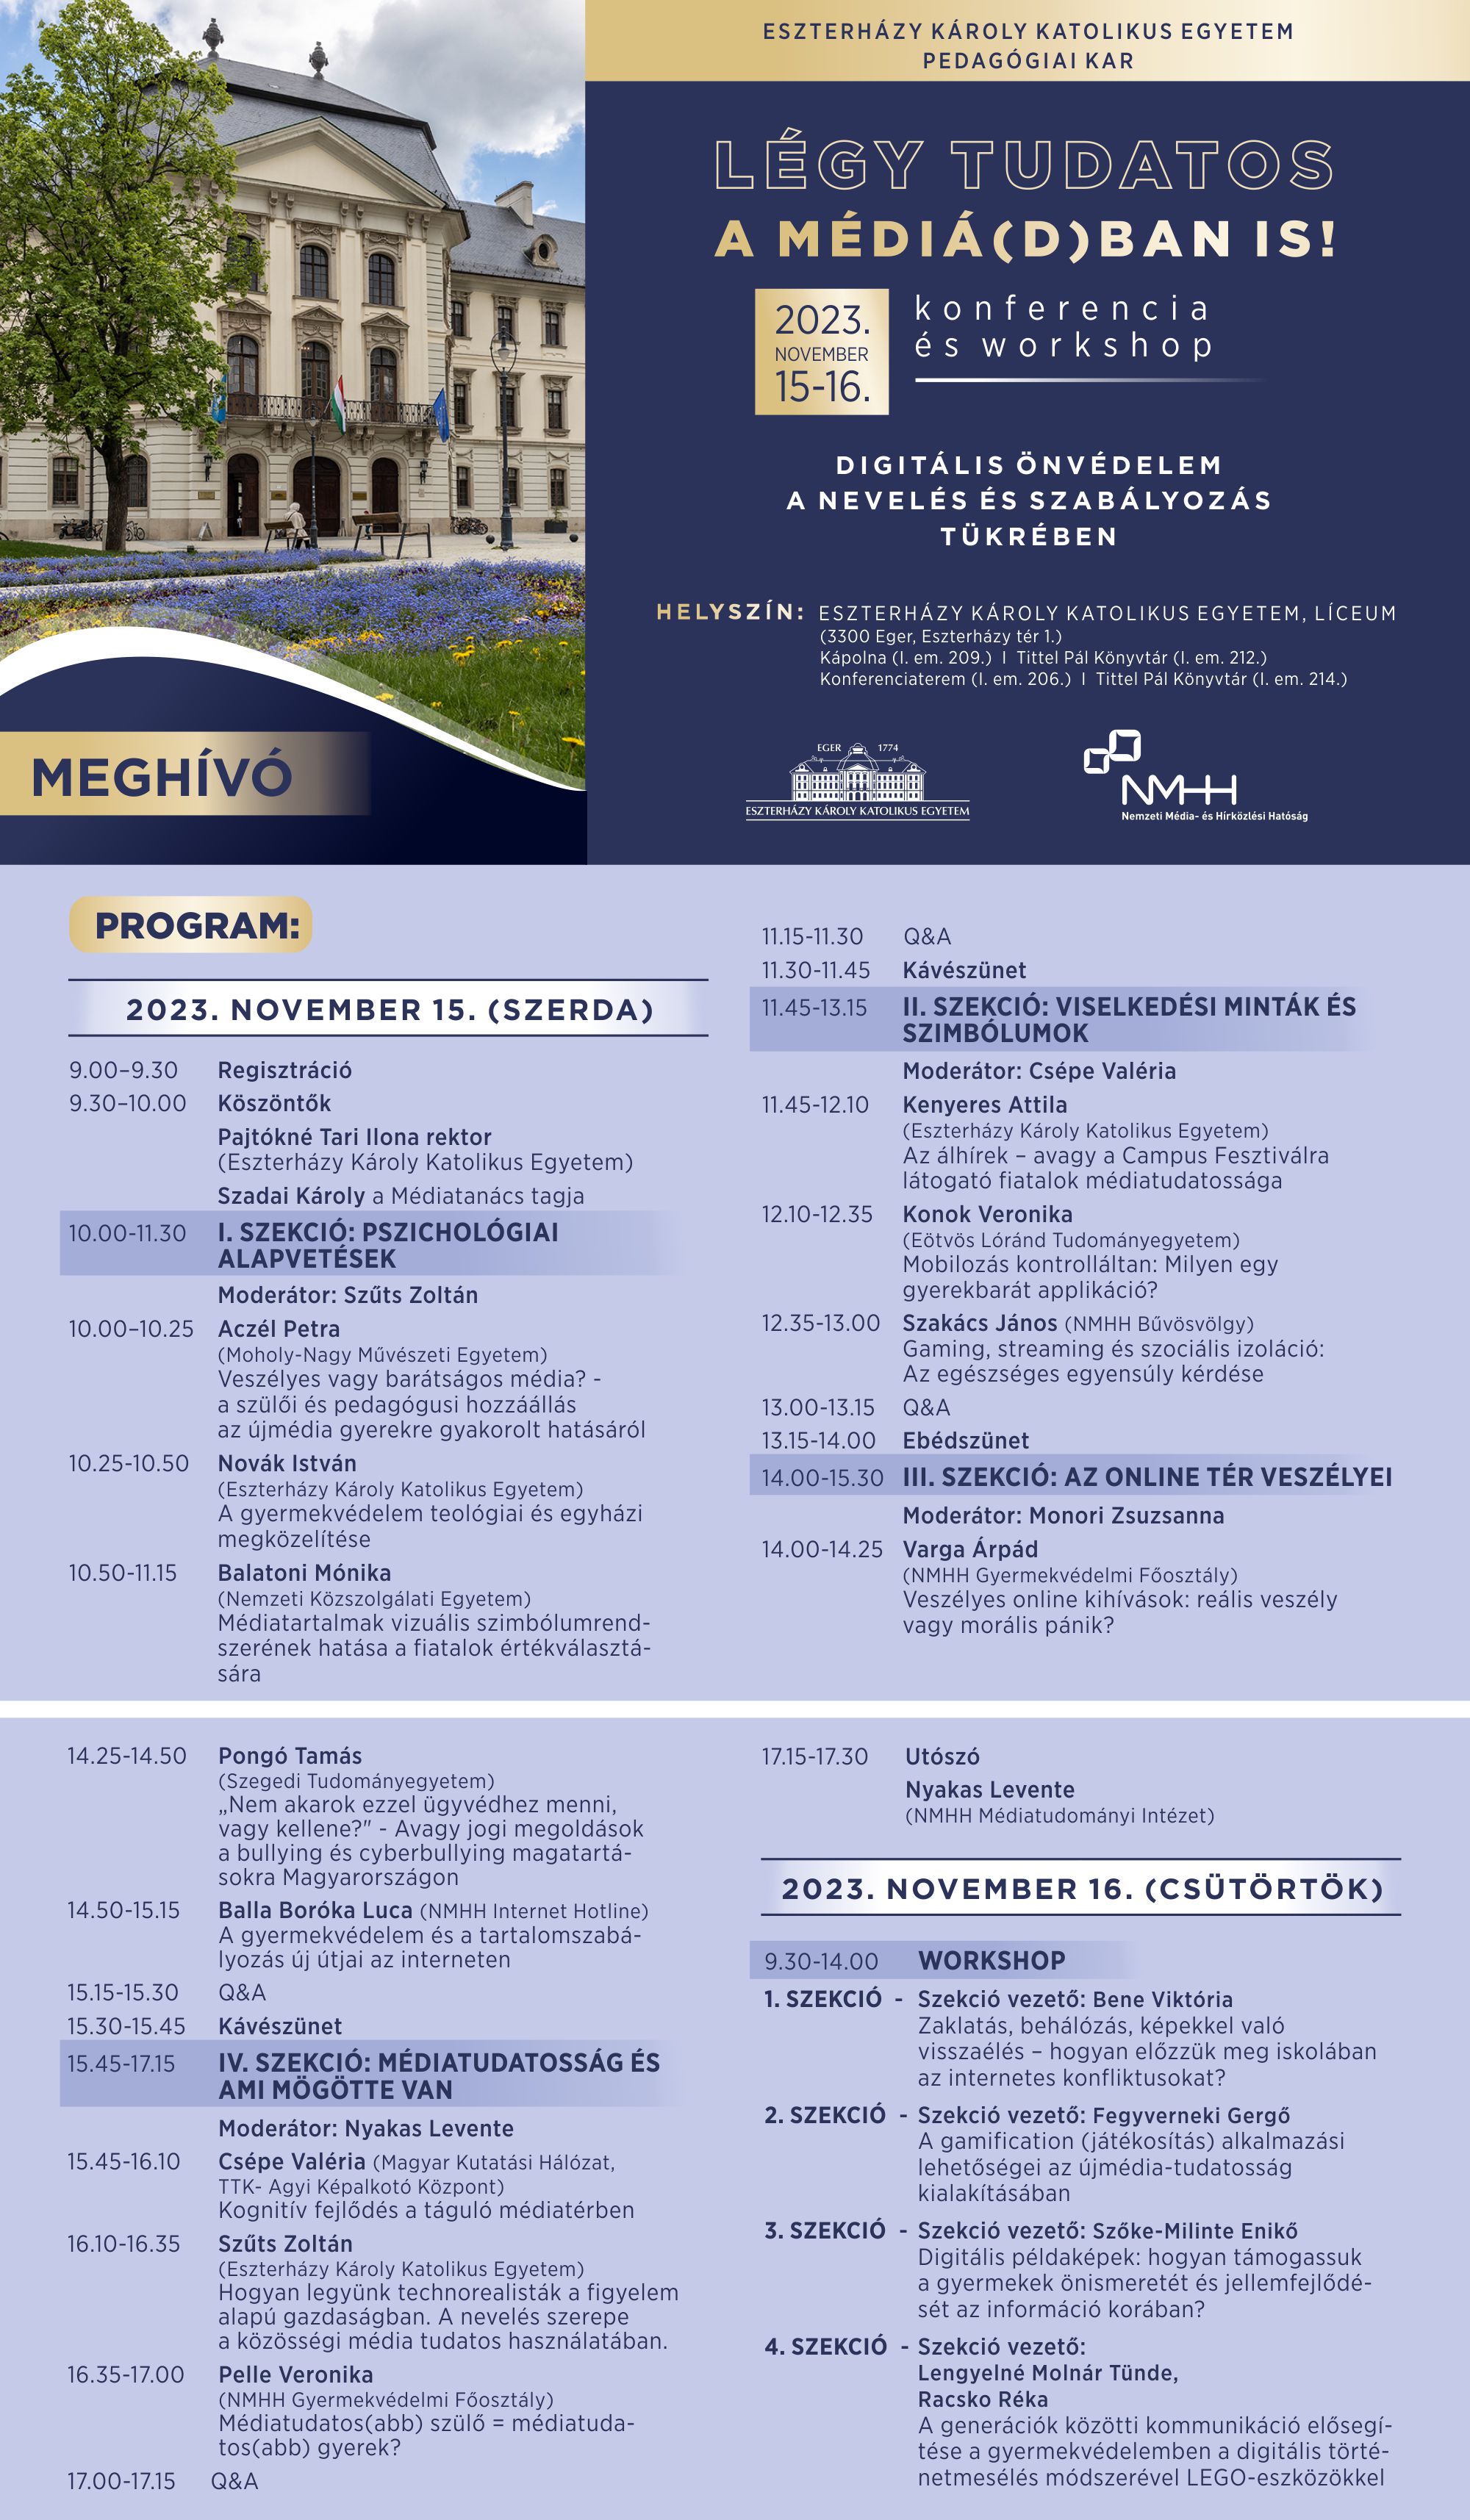 GYERMEKVEDELMI_konferencia_es_workshop20231115_16_elektronikus_meghivo_2.jpg